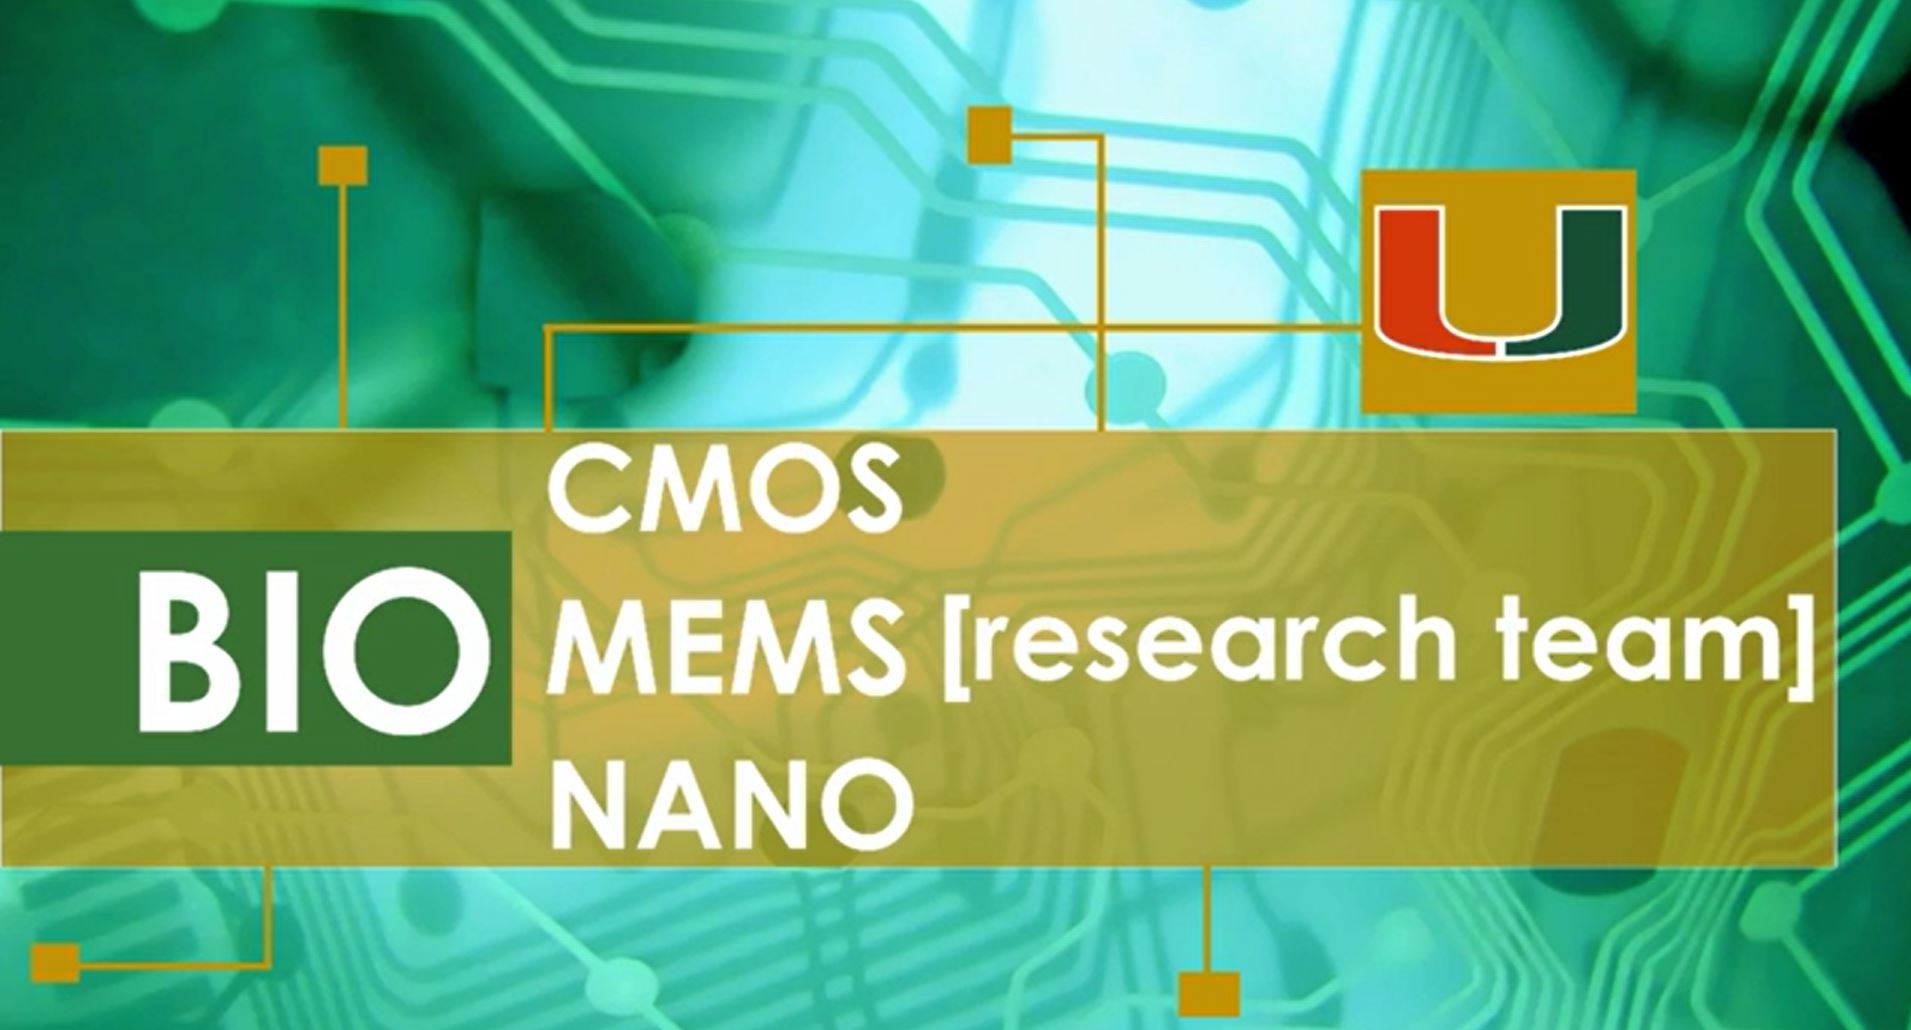 UM CoE videos showcased by NSF Science 360